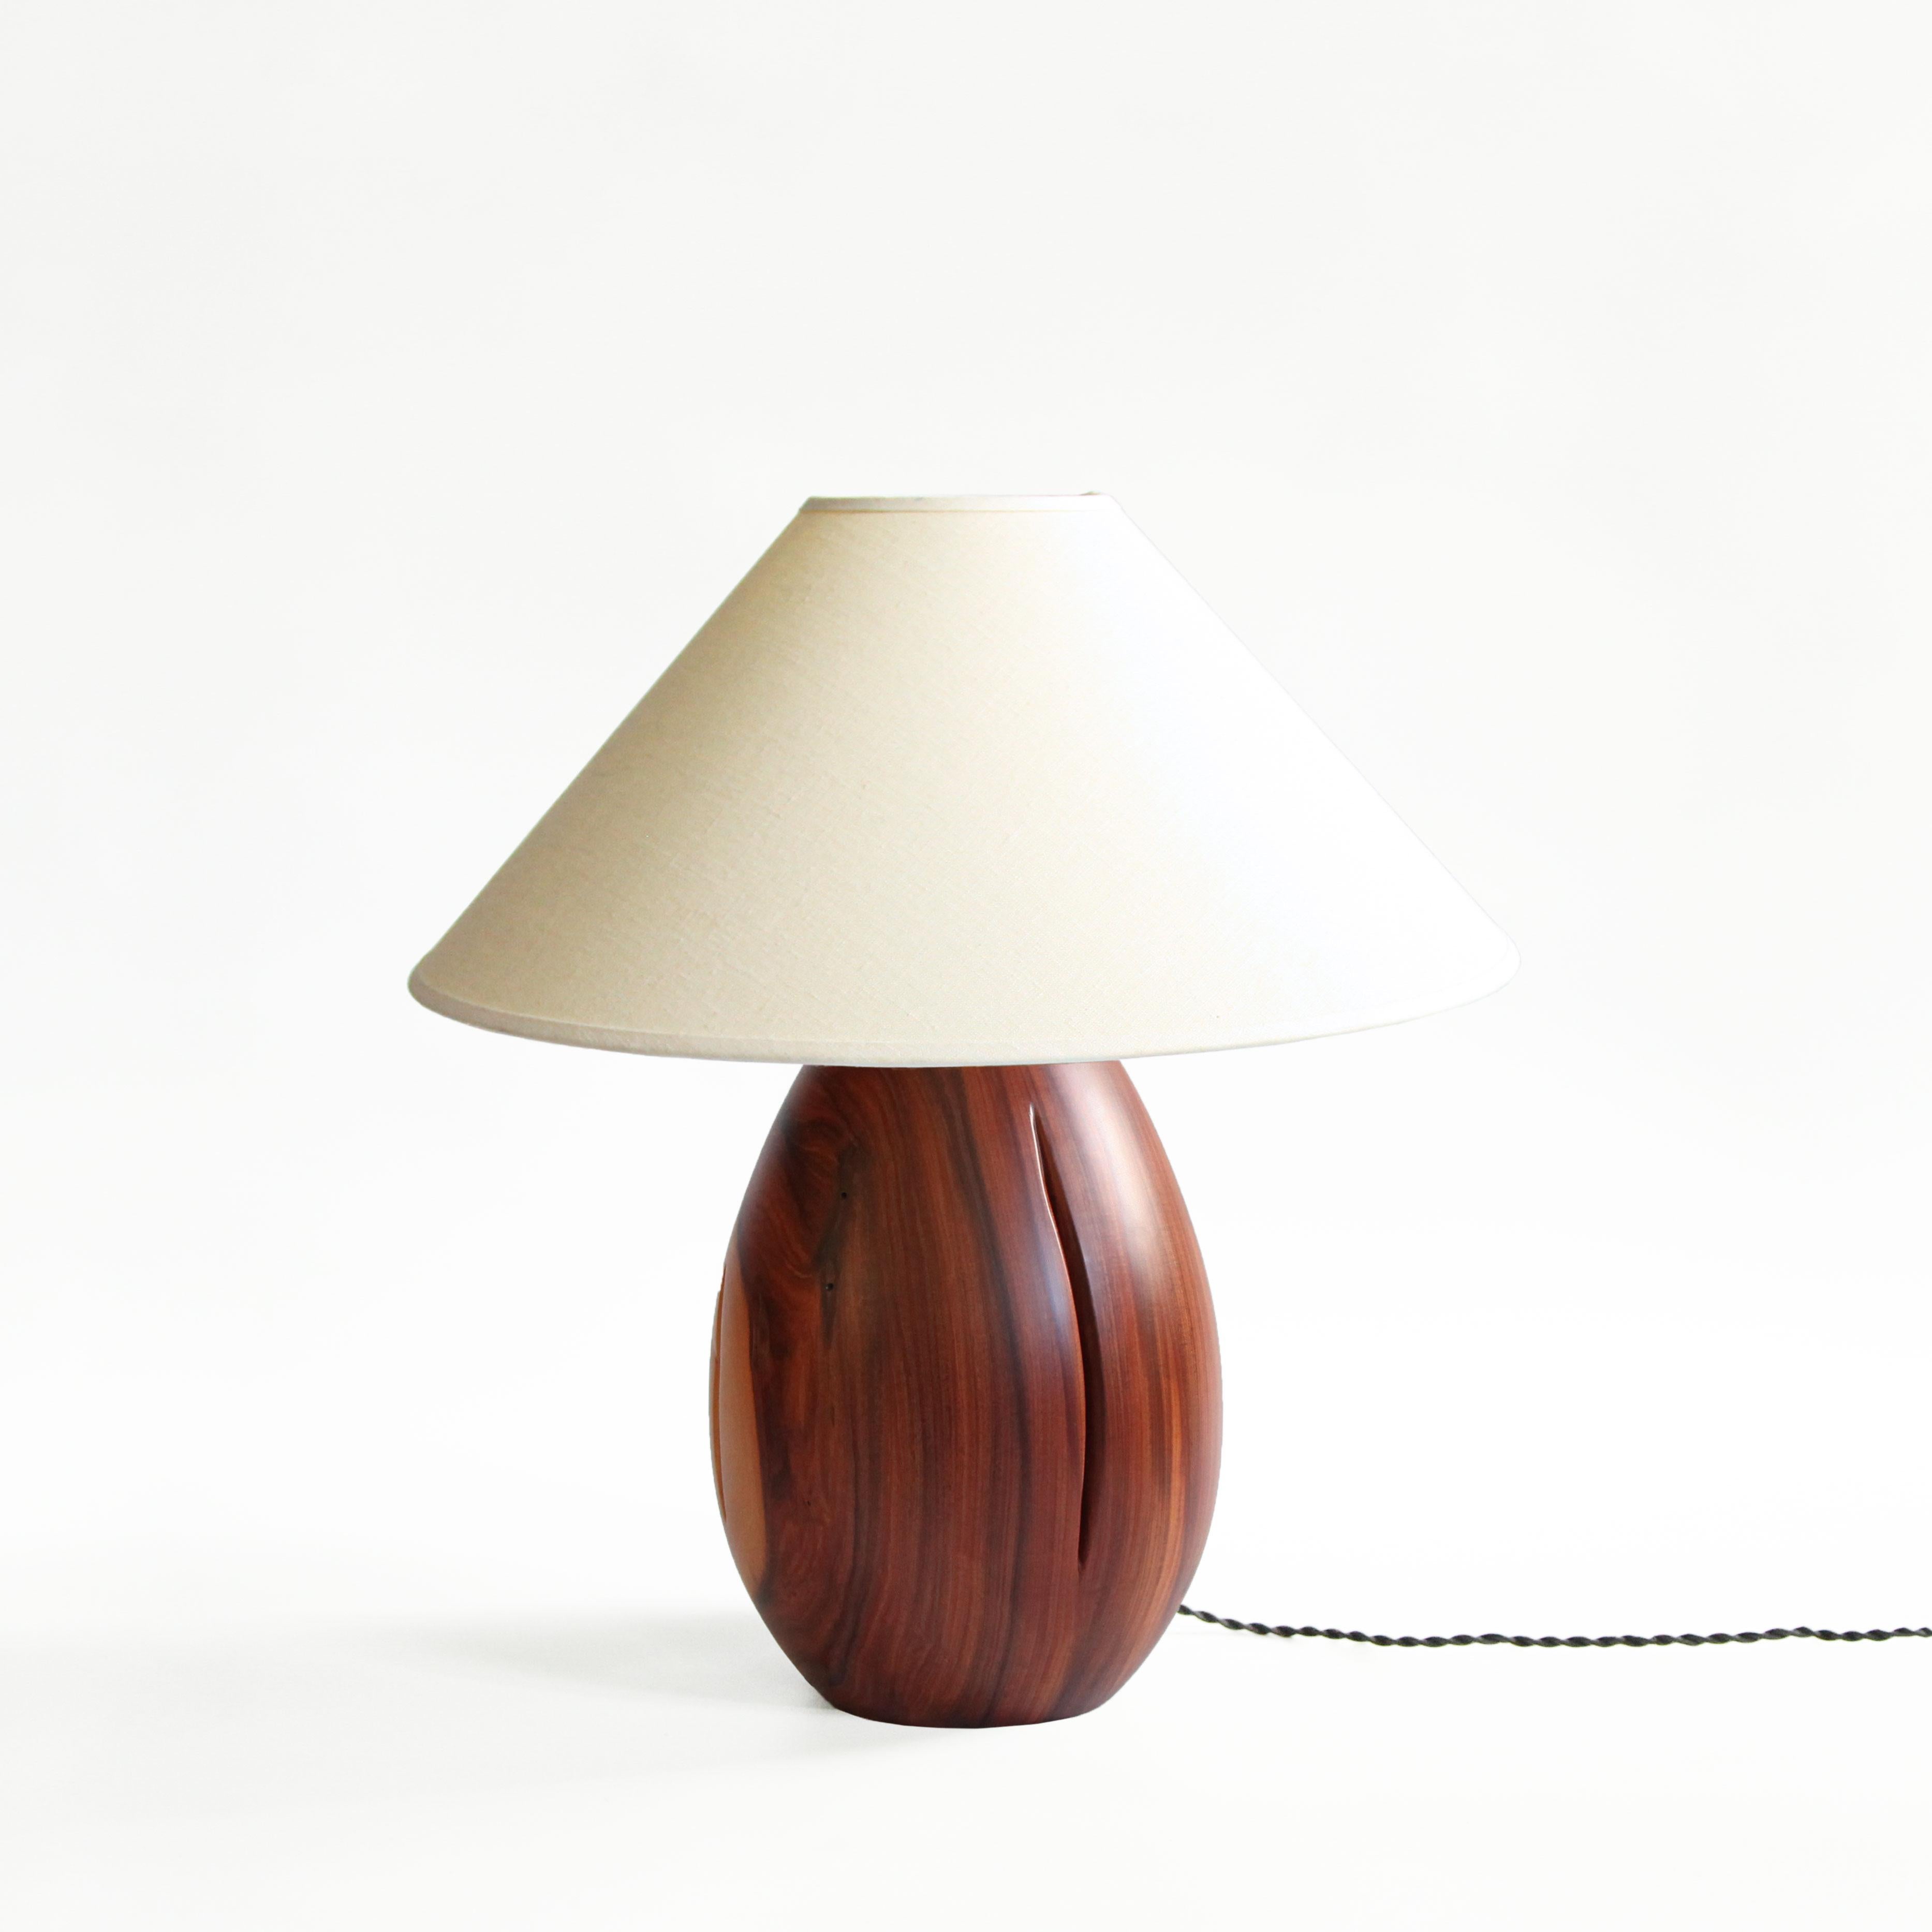 Bolivian Tropical Hardwood Lamp and White Linen Shade, Medium, Árbol Collection, 46